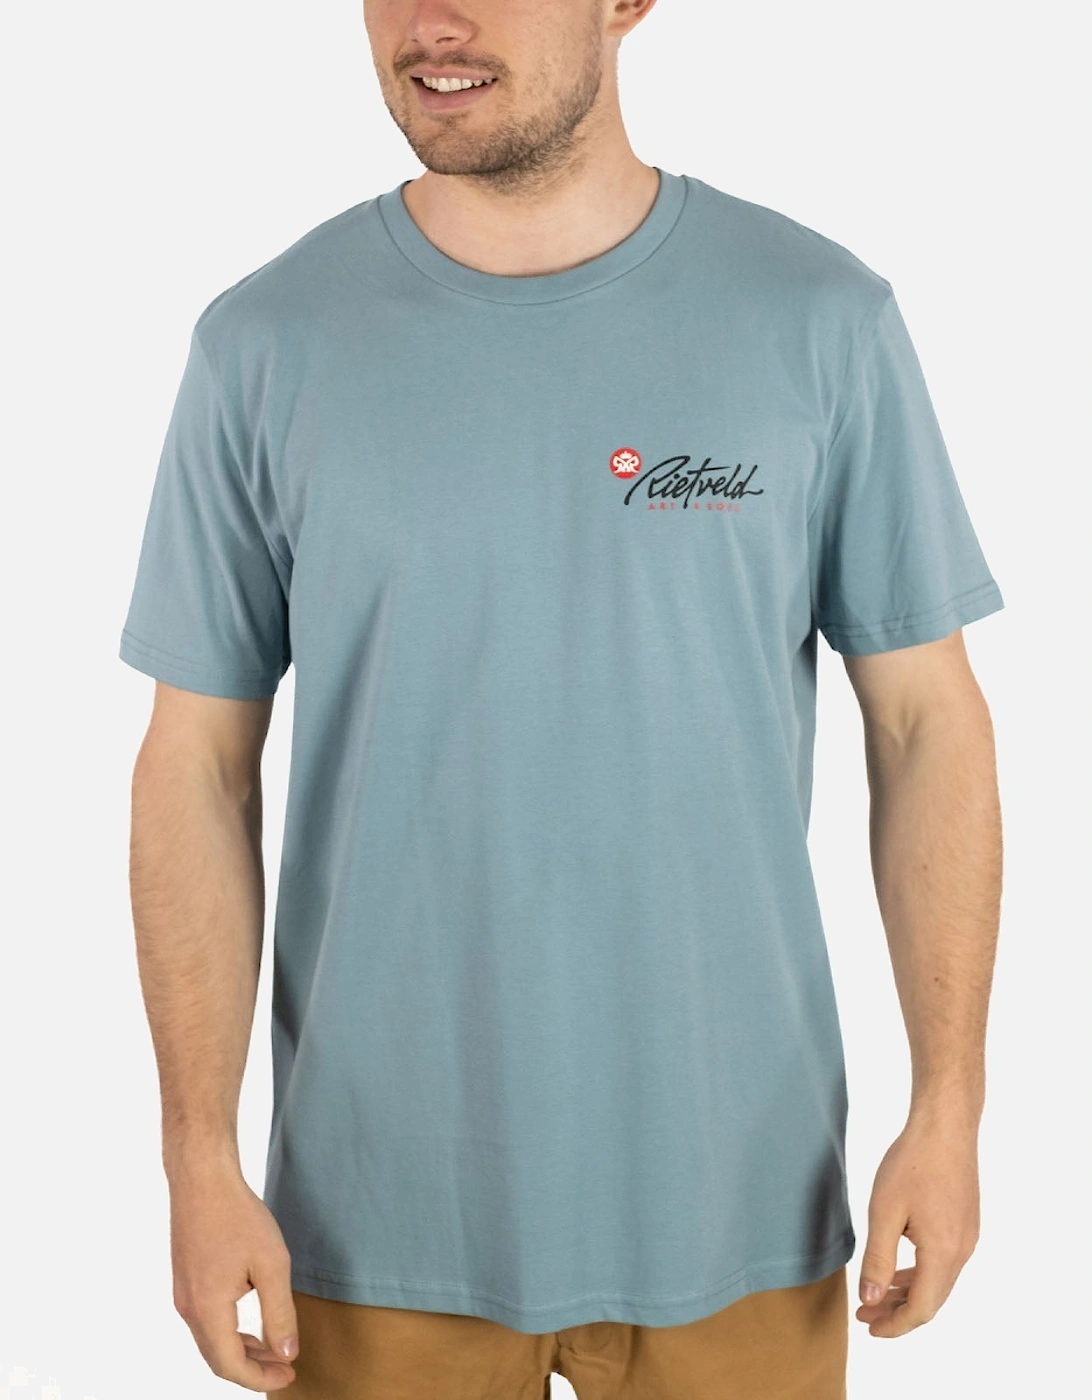 Mens Surfin Al Classic Graphic T-Shirt Tee